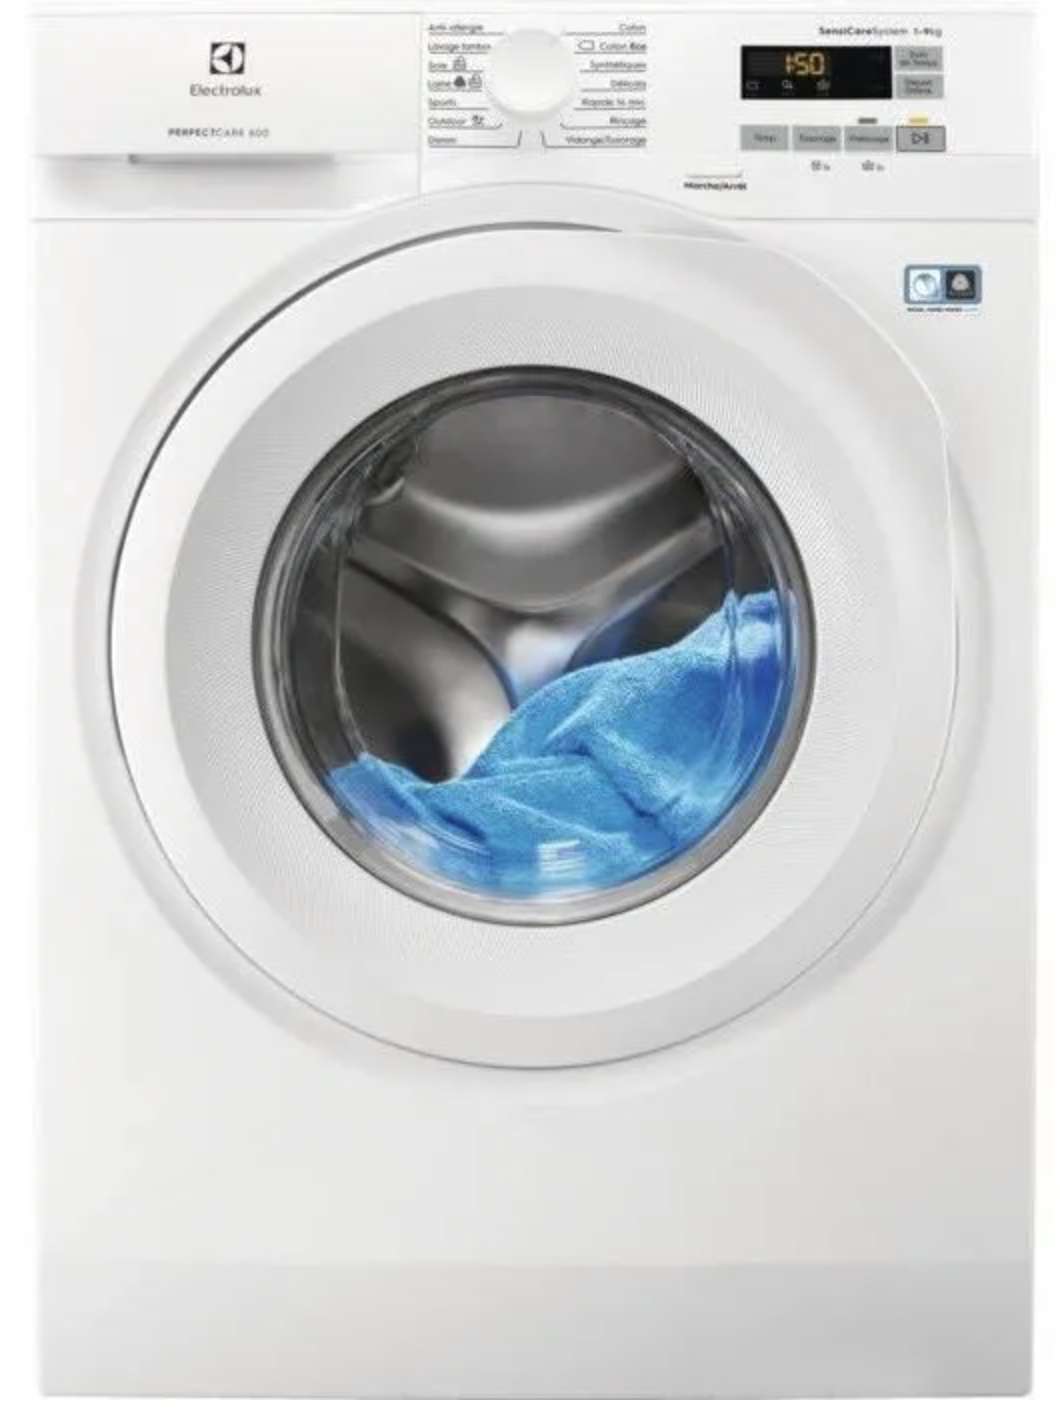 Good deal: €260 discount on the Hublot Electrolux washing machine thumbnail